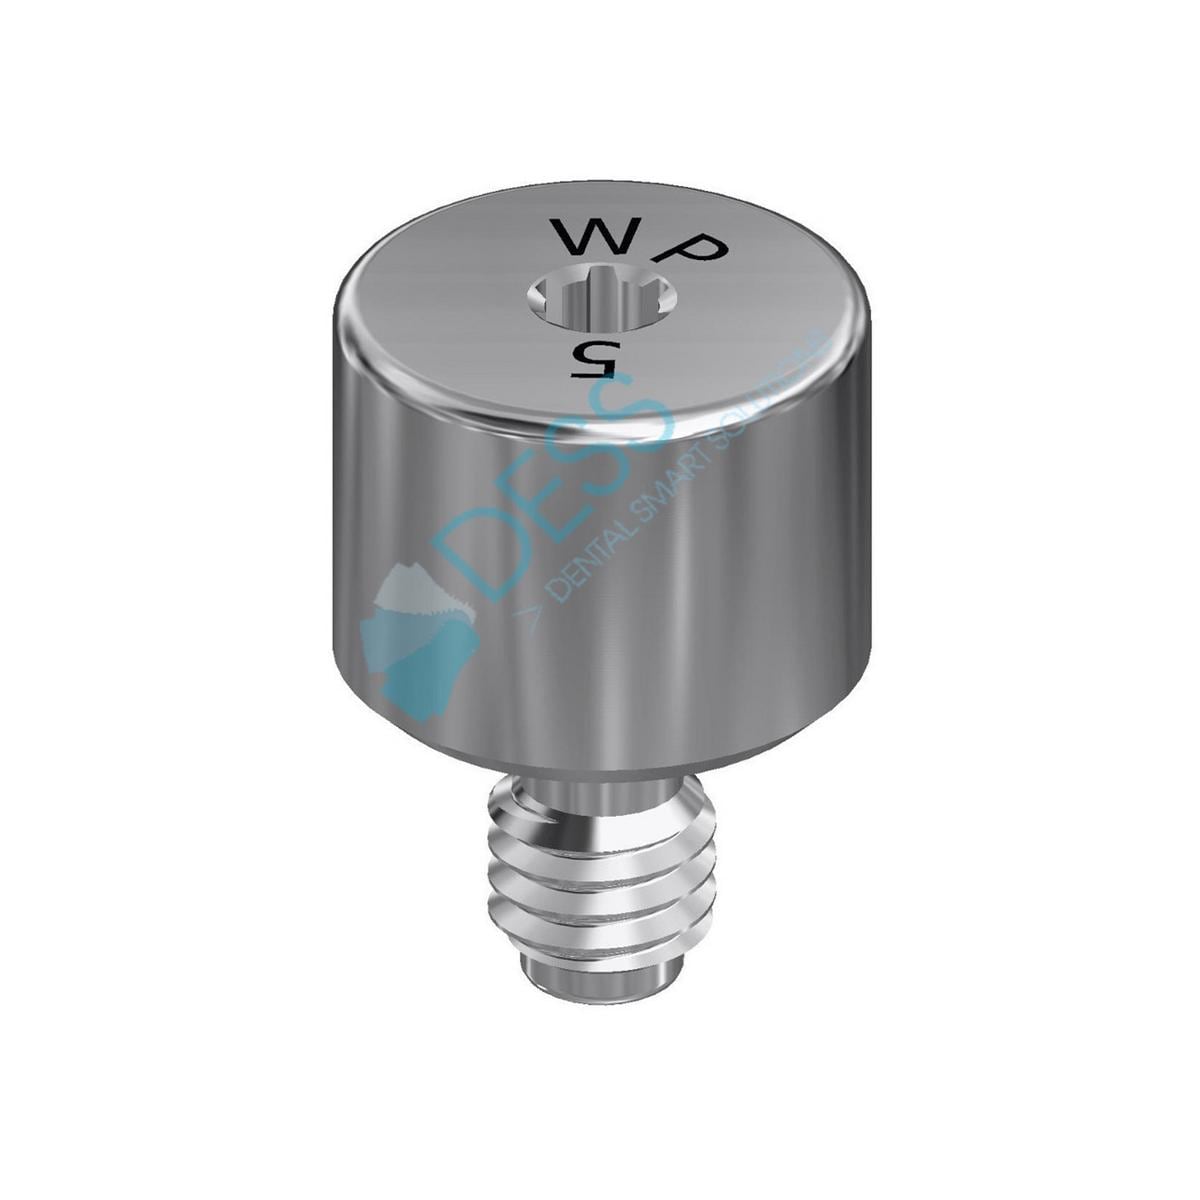 Gingivaformer - kompatibel mit Nobel Branemark® - WP Ø 5,1 mm, Höhe 5,0 mm